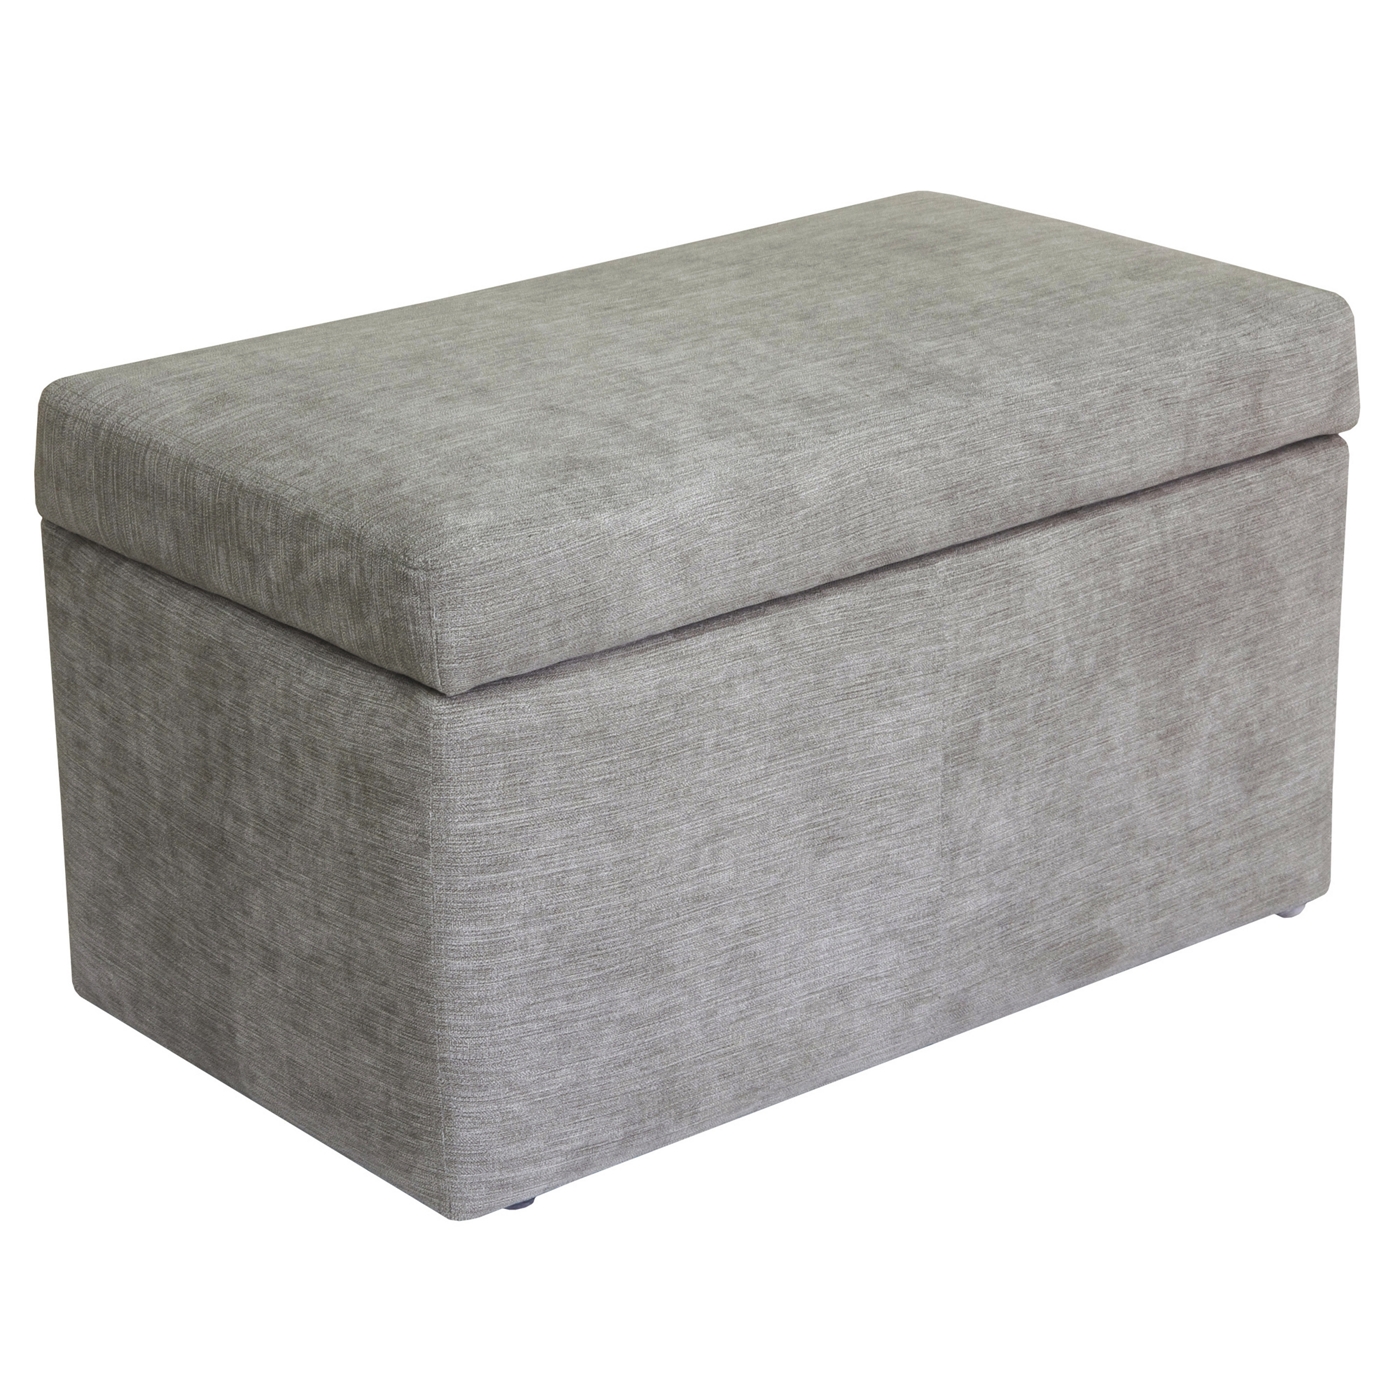 Grey Kubic storage bench